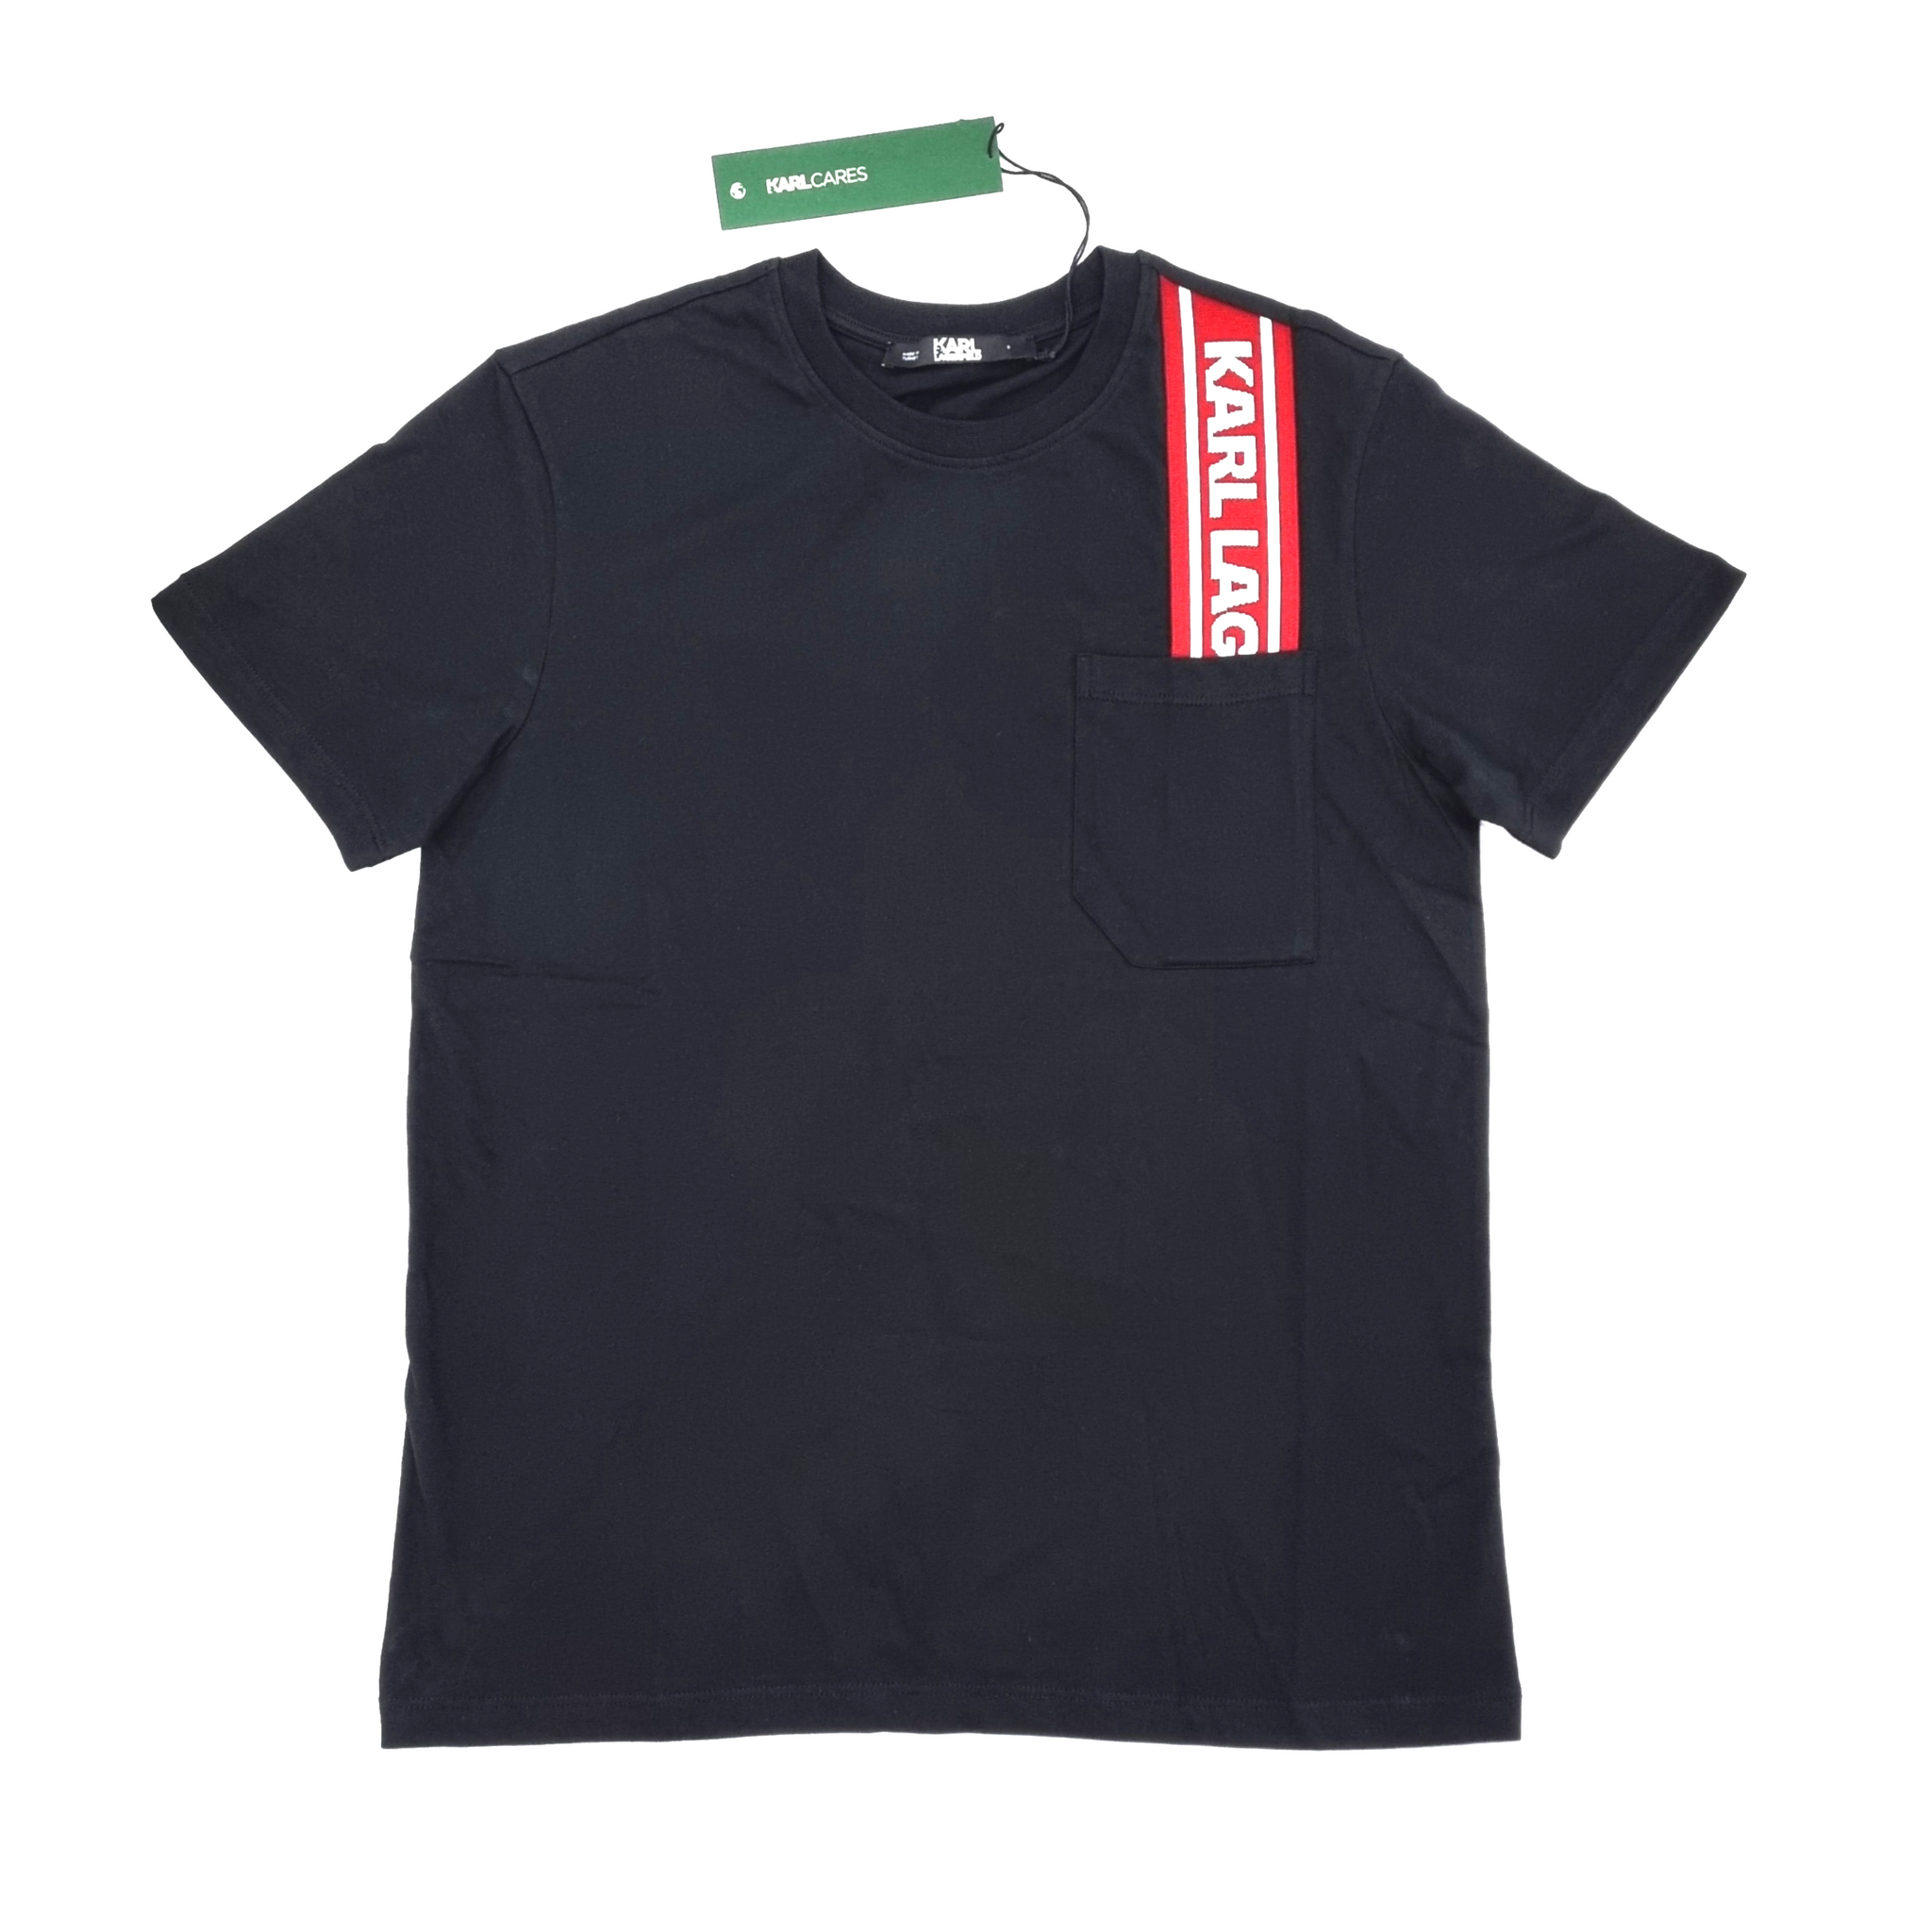 Karl Lagerfeld Karl Logo Tape Pocket T-Shirt 100% Organic Cotton (Black)